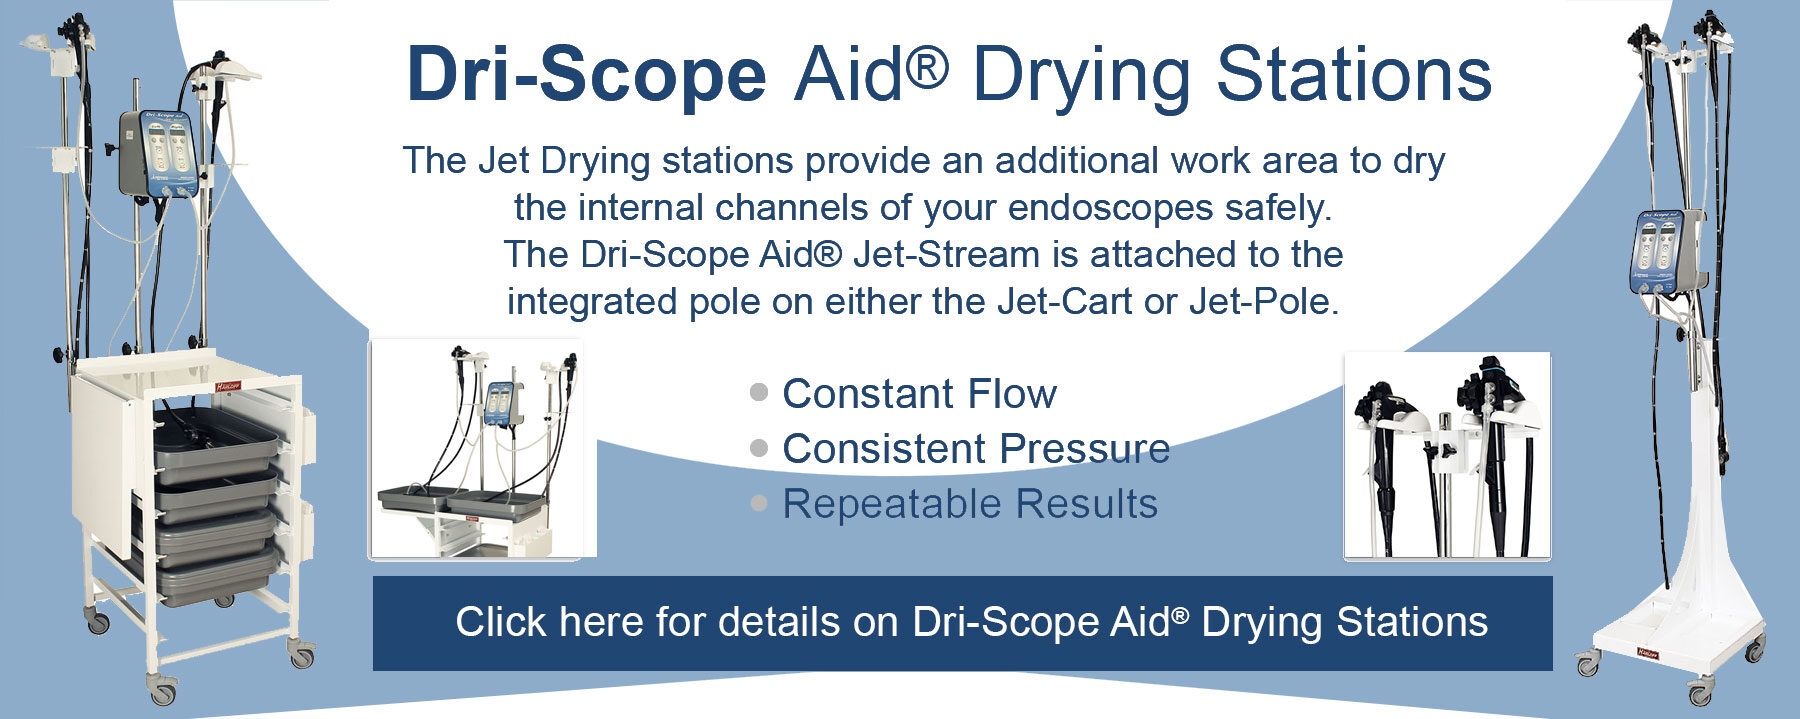 Dri-Scope Drying Stations